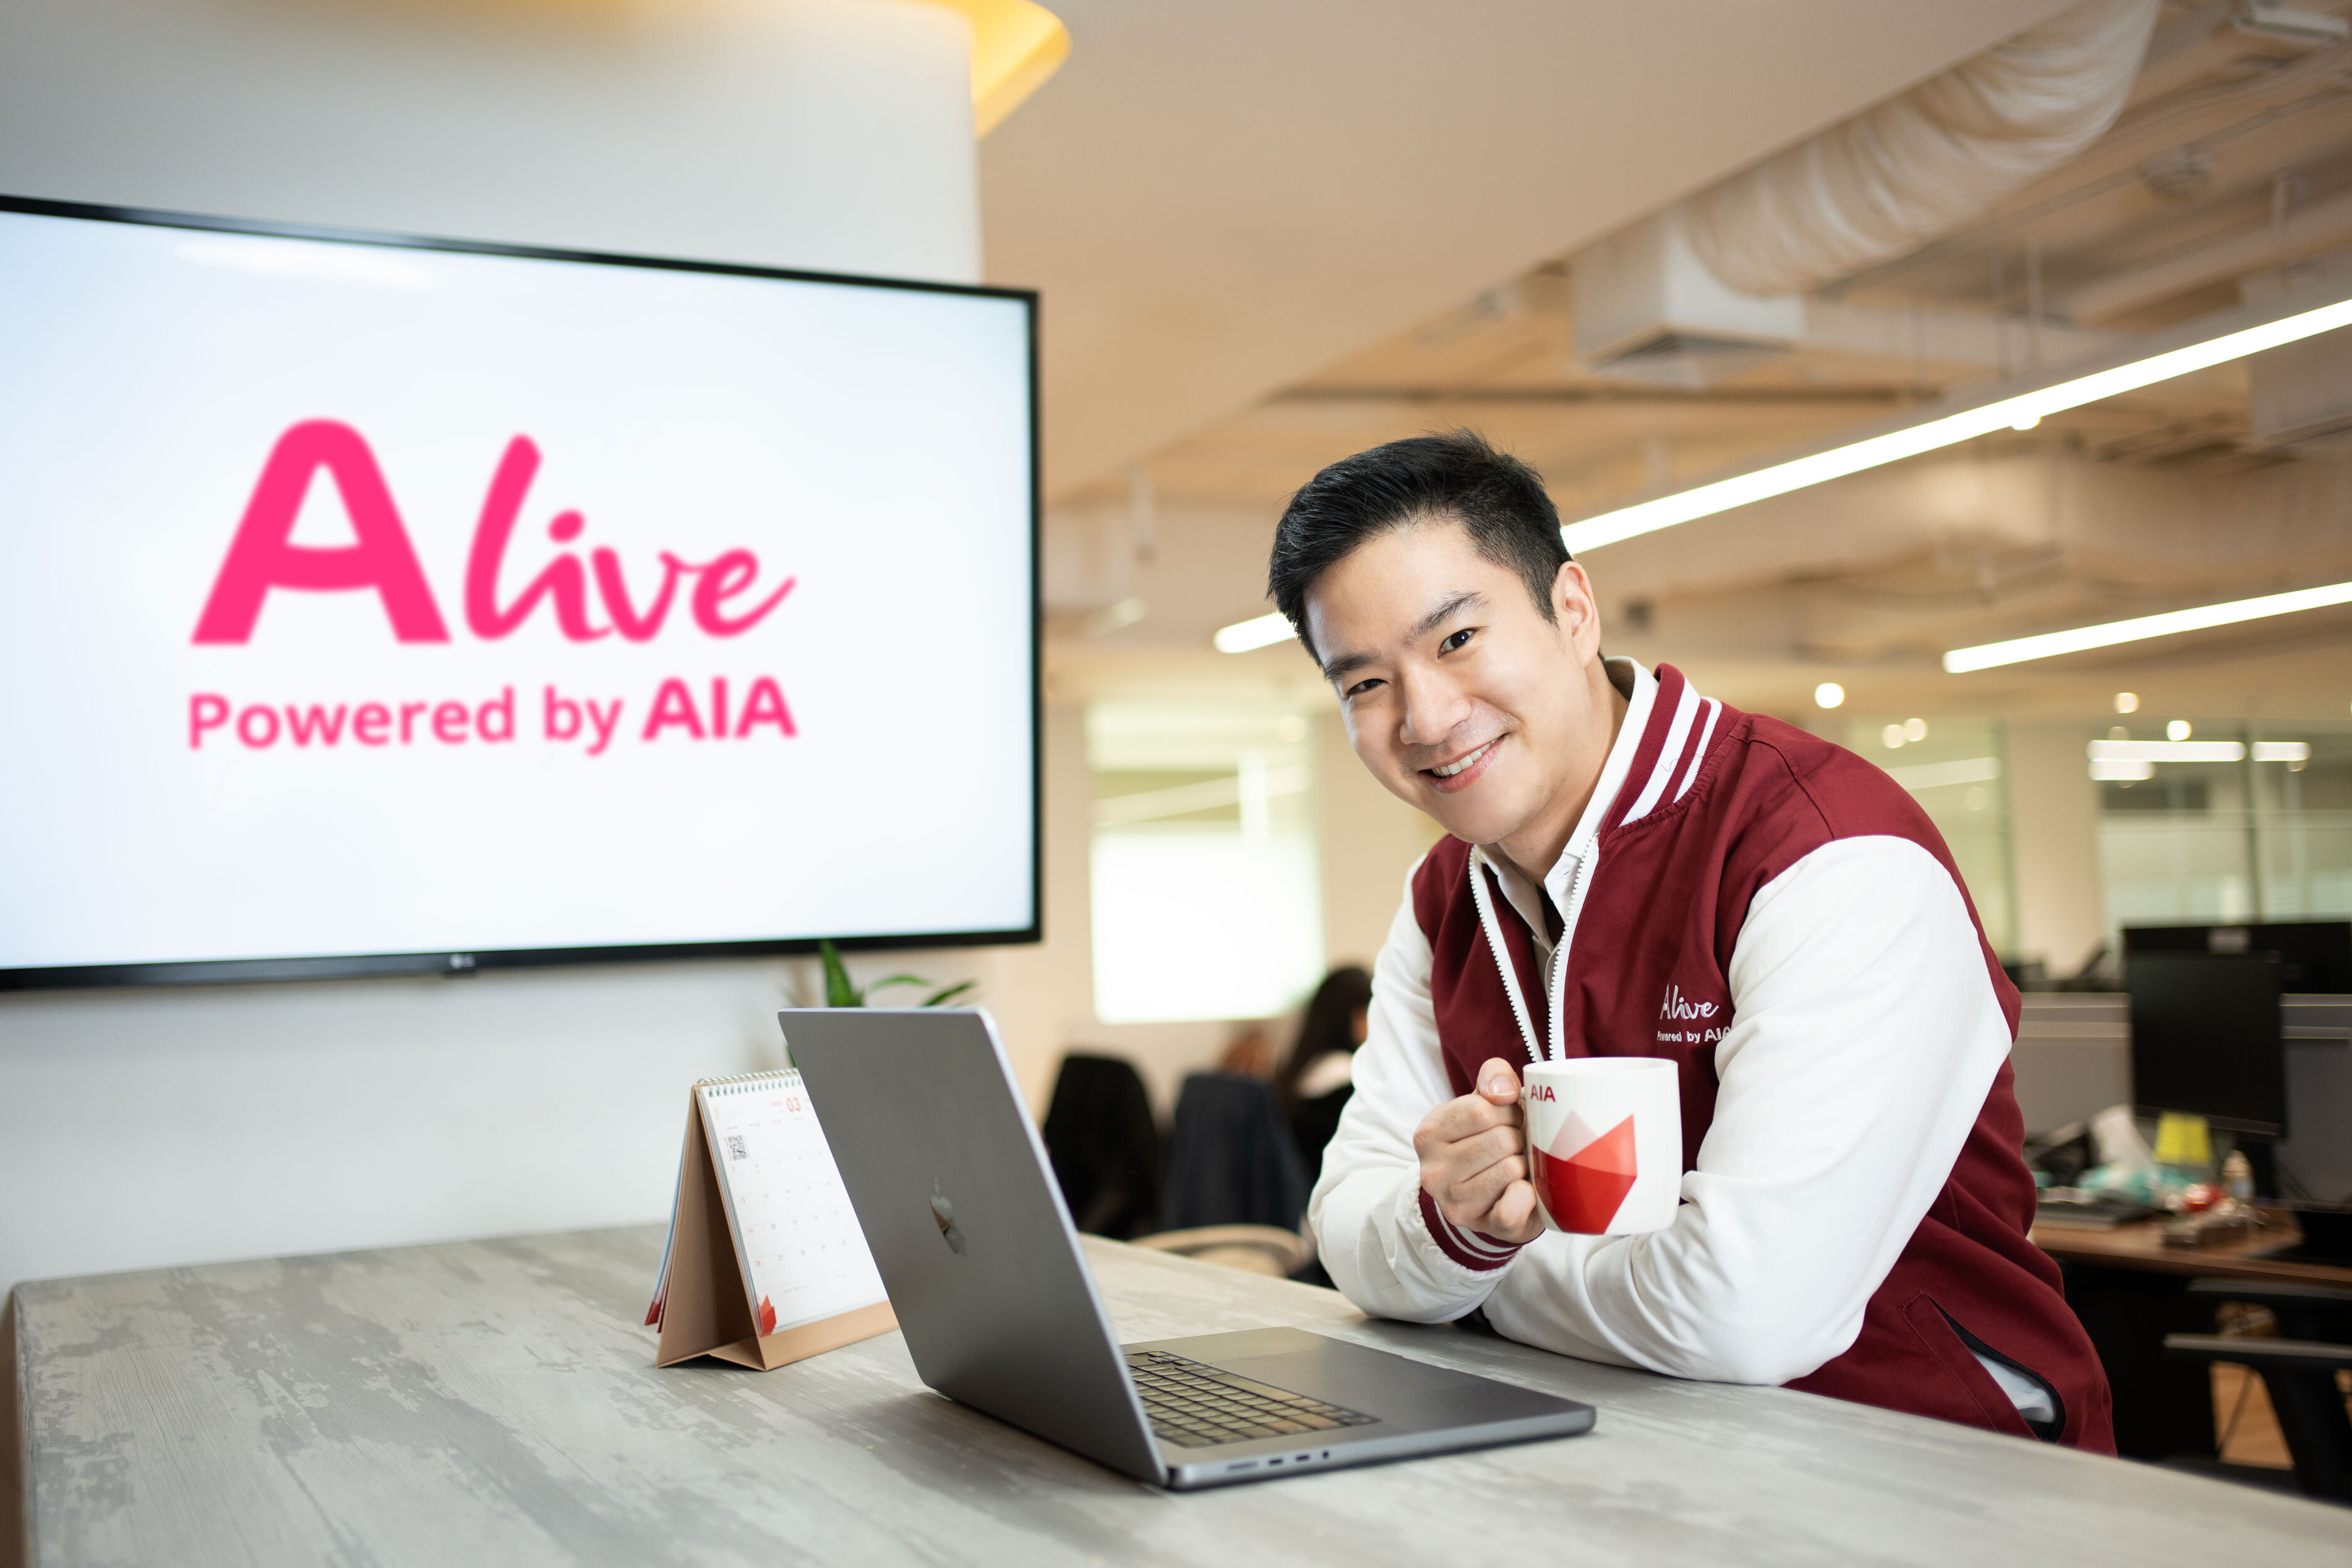 ALive Powered by AIA ฉลองครบรอบ 2 ปี มุ่งหน้าสู่การเป็นผู้นำ แพลตฟอร์มดิจิทัลด้านการดูแลสุขภาพของประเทศไทย